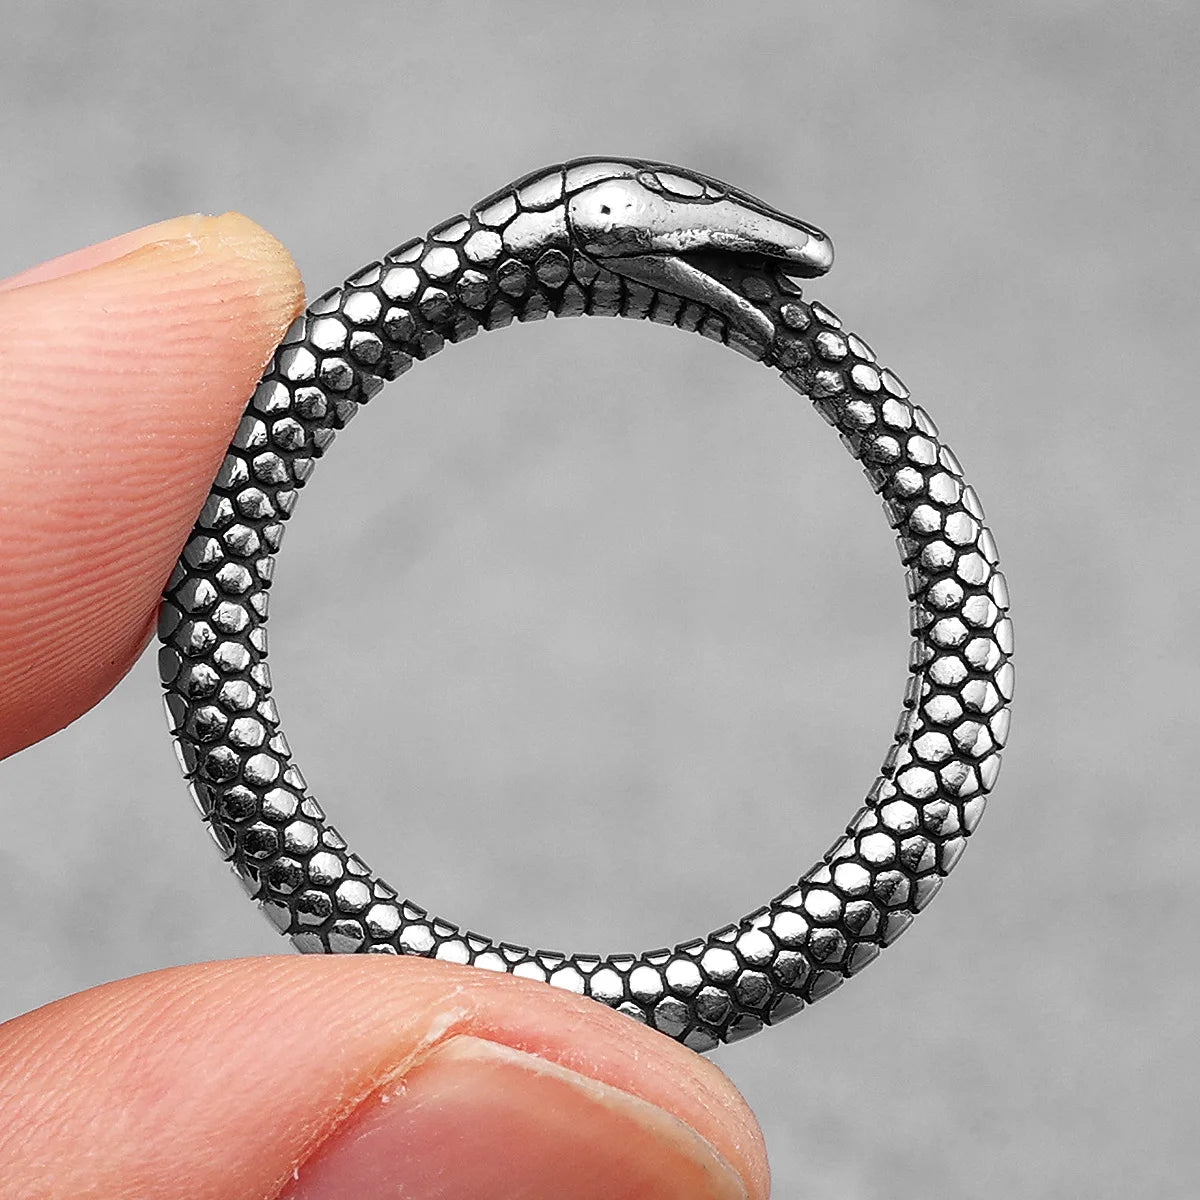 Snake Ouroboros Stainless Steel Rings